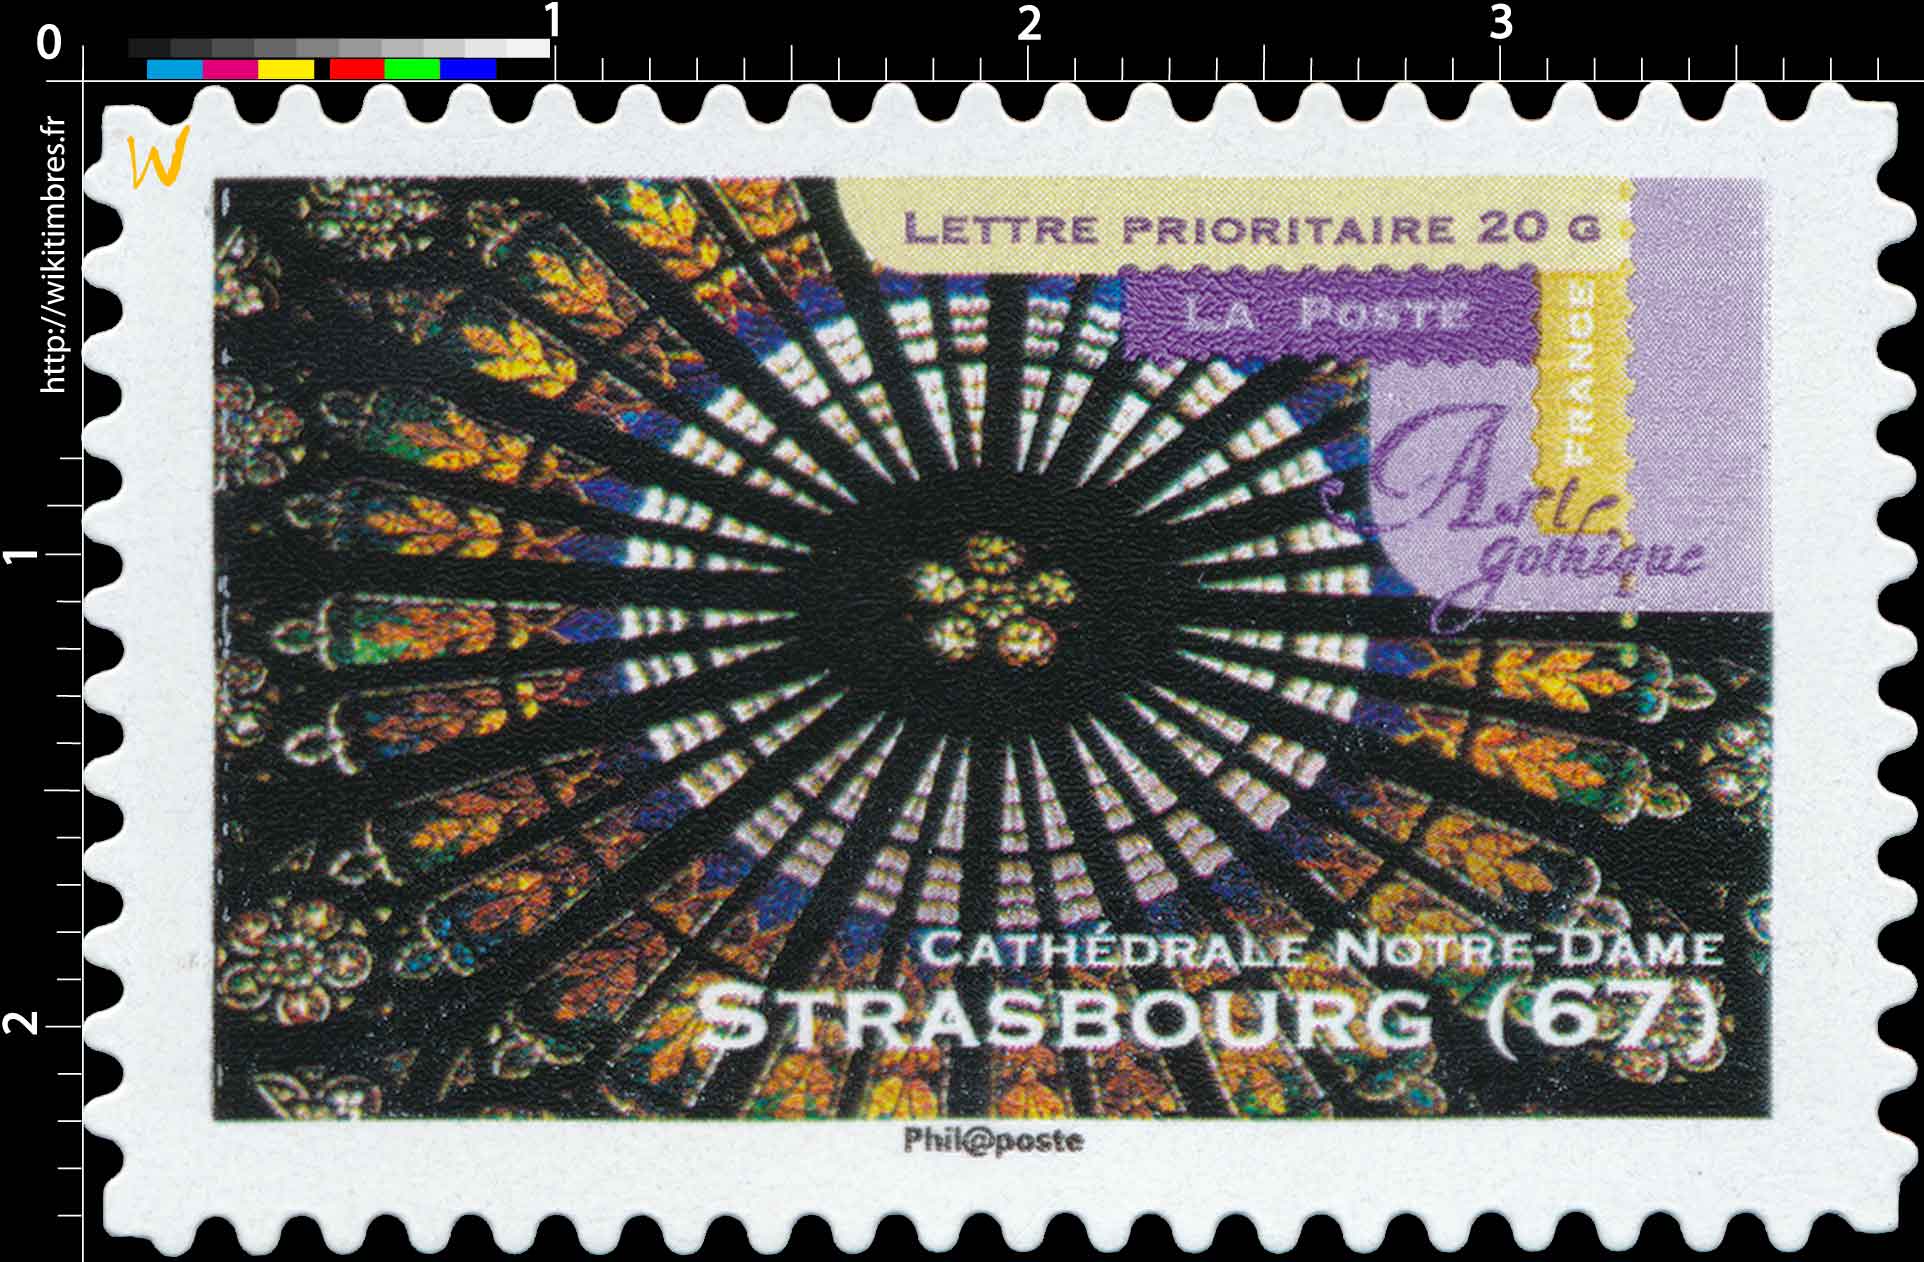 Art gothique cathédrale Notre-Dame Strasbourg (67)